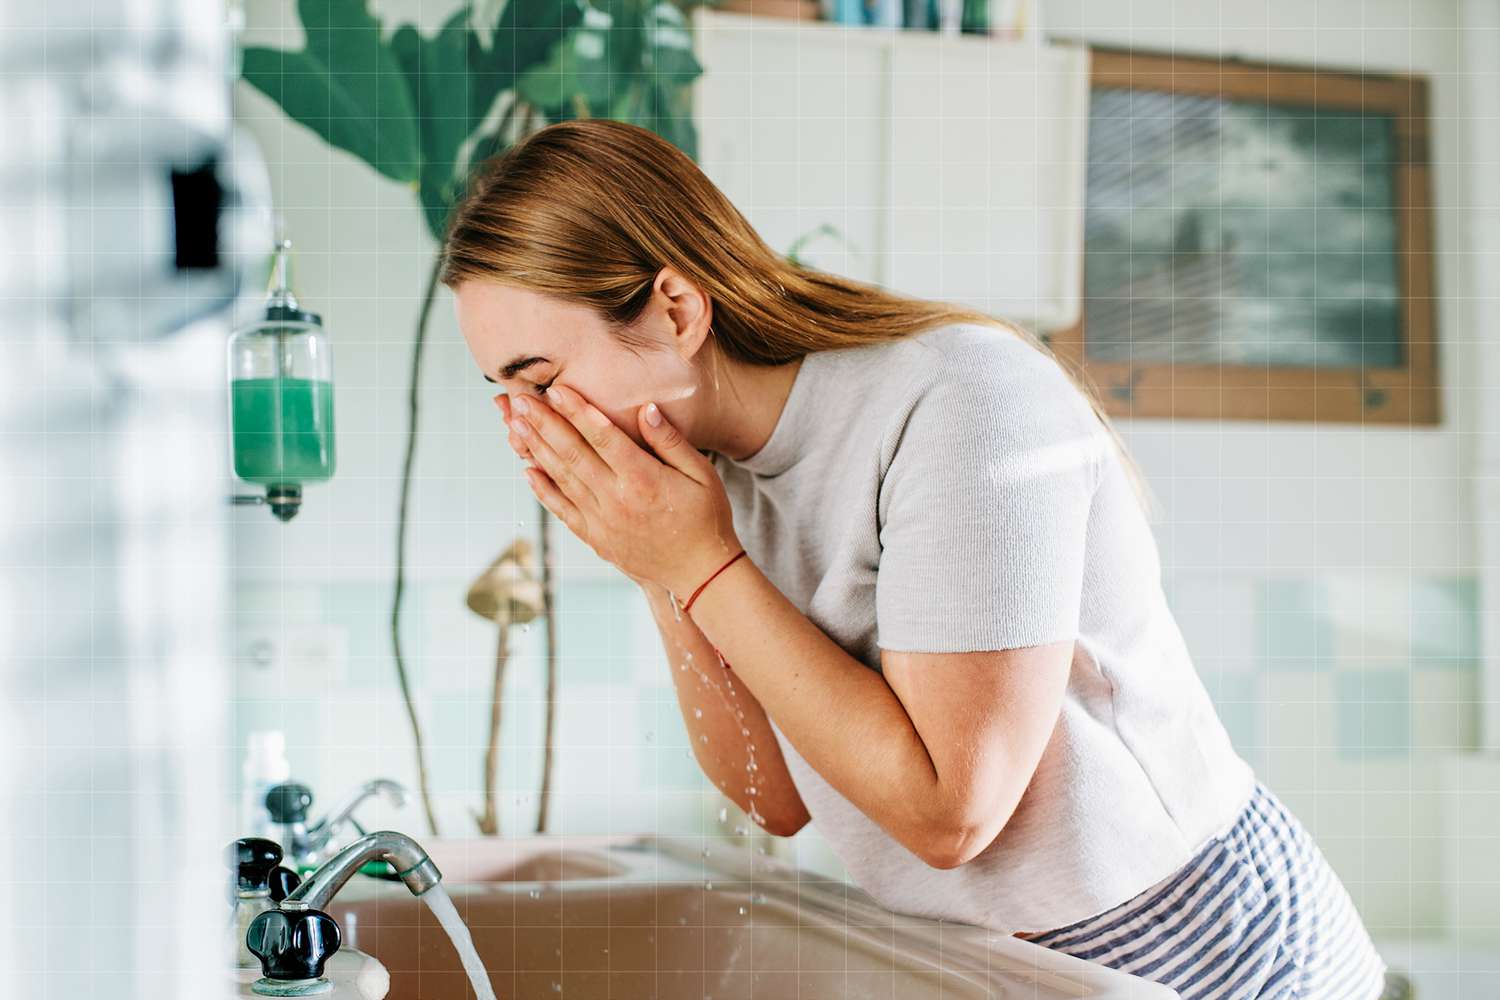 Woman in bathroom washing face